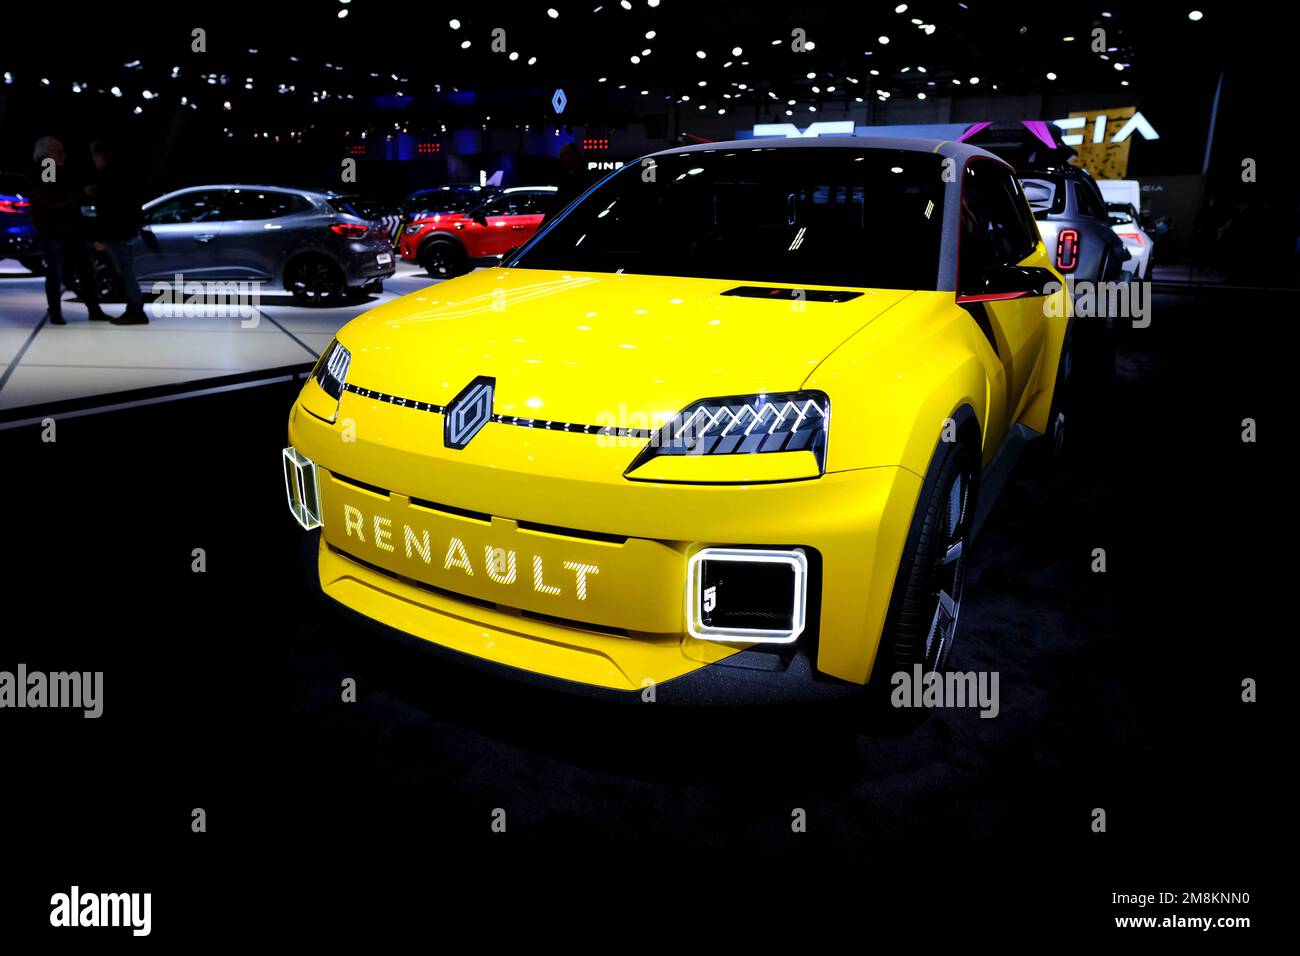 Renault scenic iii -Fotos und -Bildmaterial in hoher Auflösung – Alamy